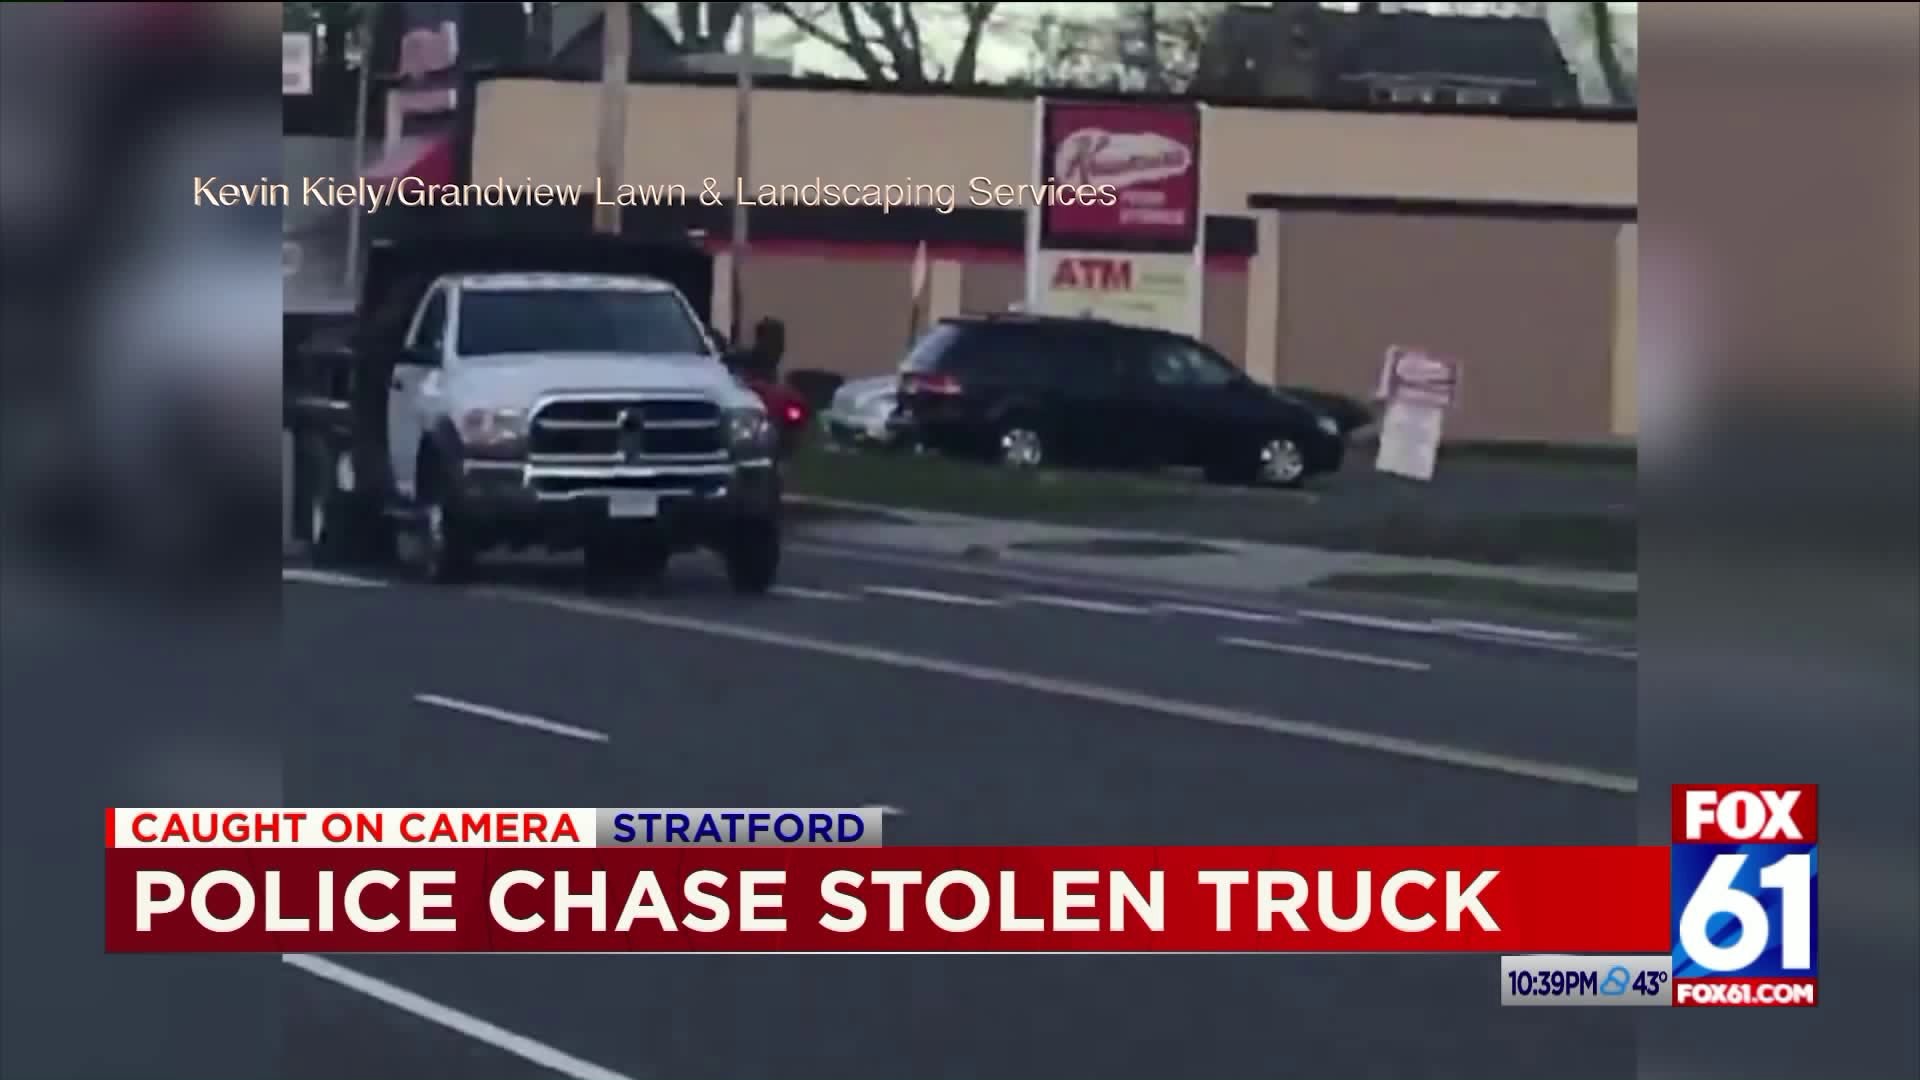 Police chase stolen truck